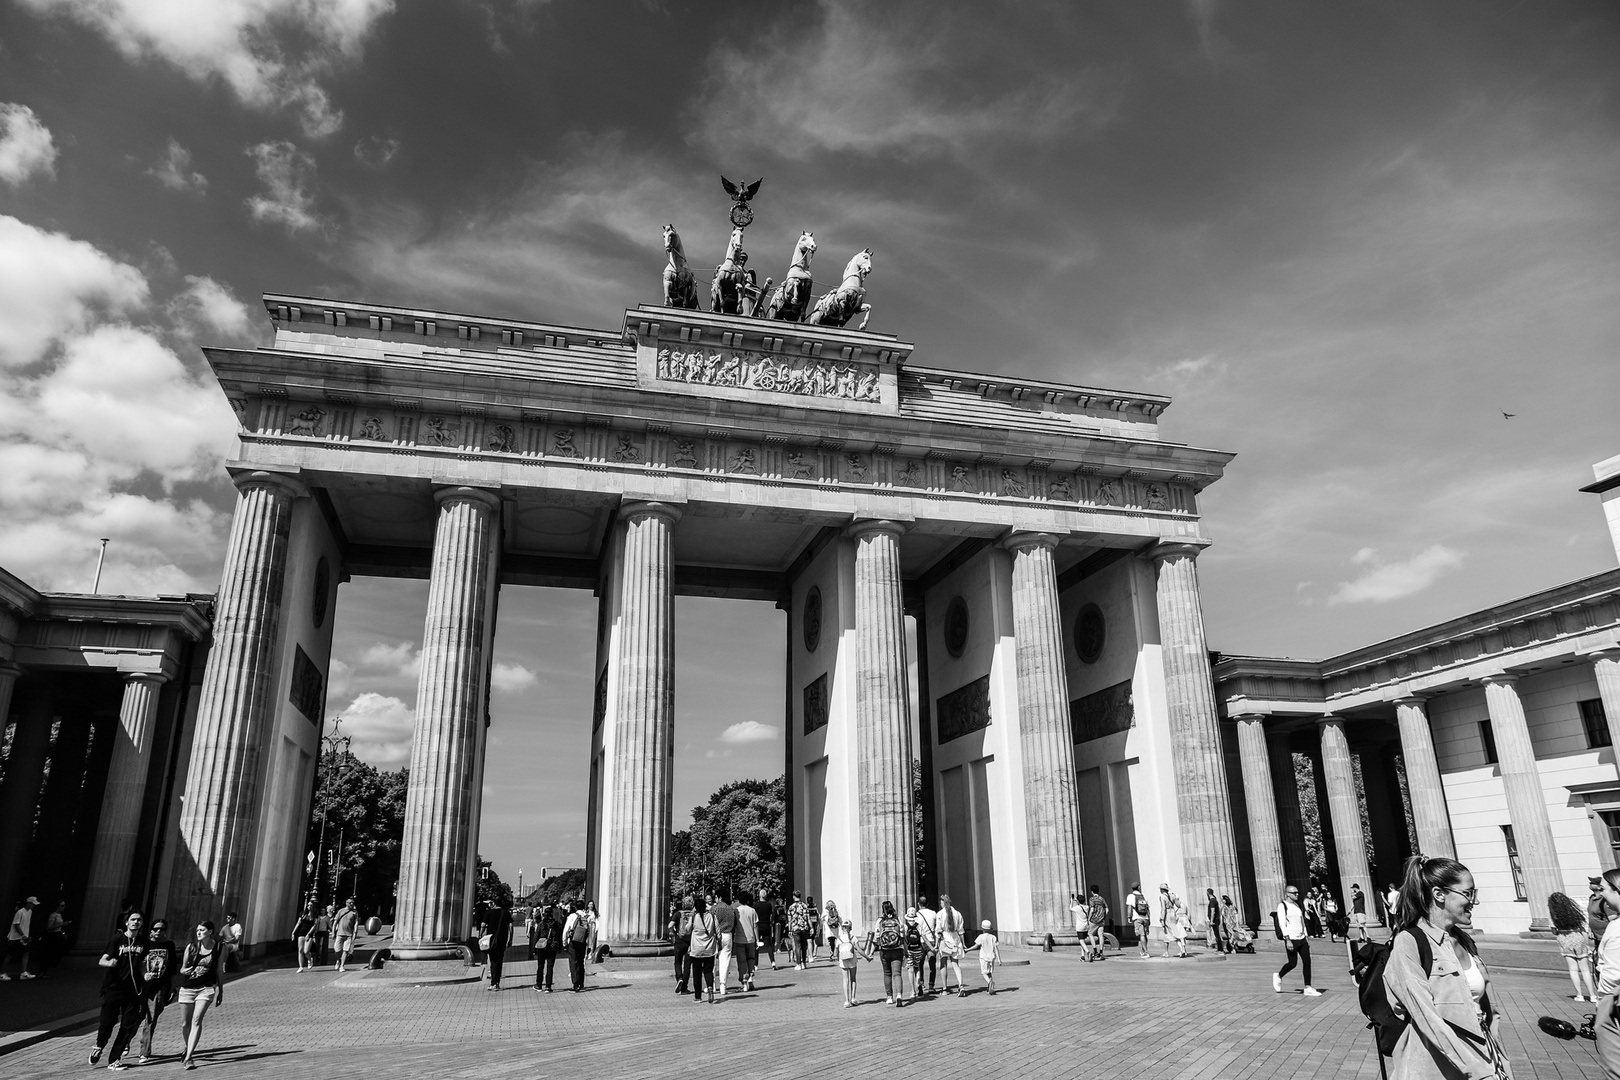 Berlin- Brandenburger Tor